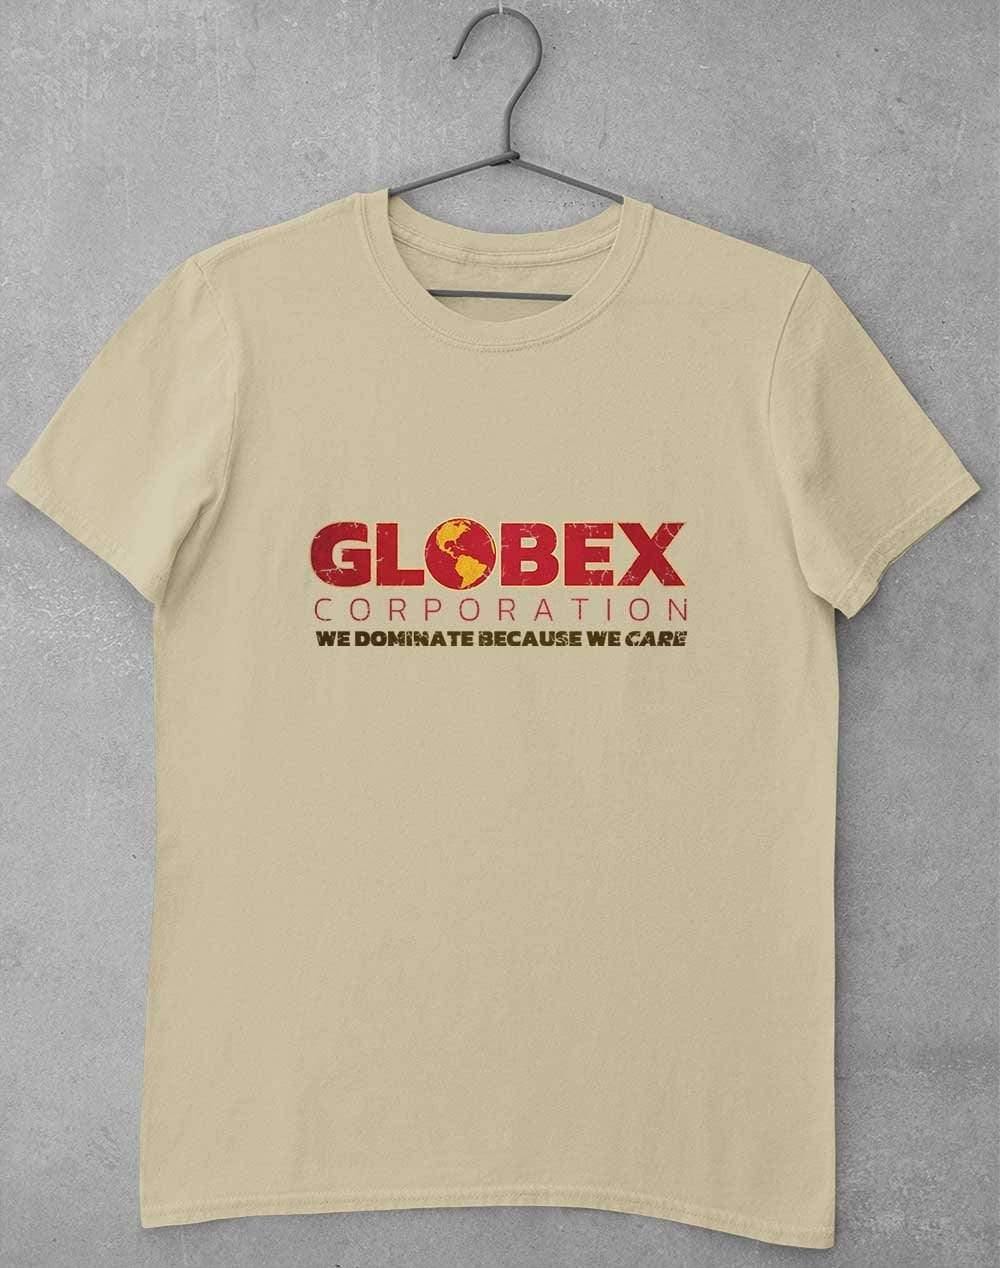 Globex Corporation T-Shirt S / Sand  - Off World Tees